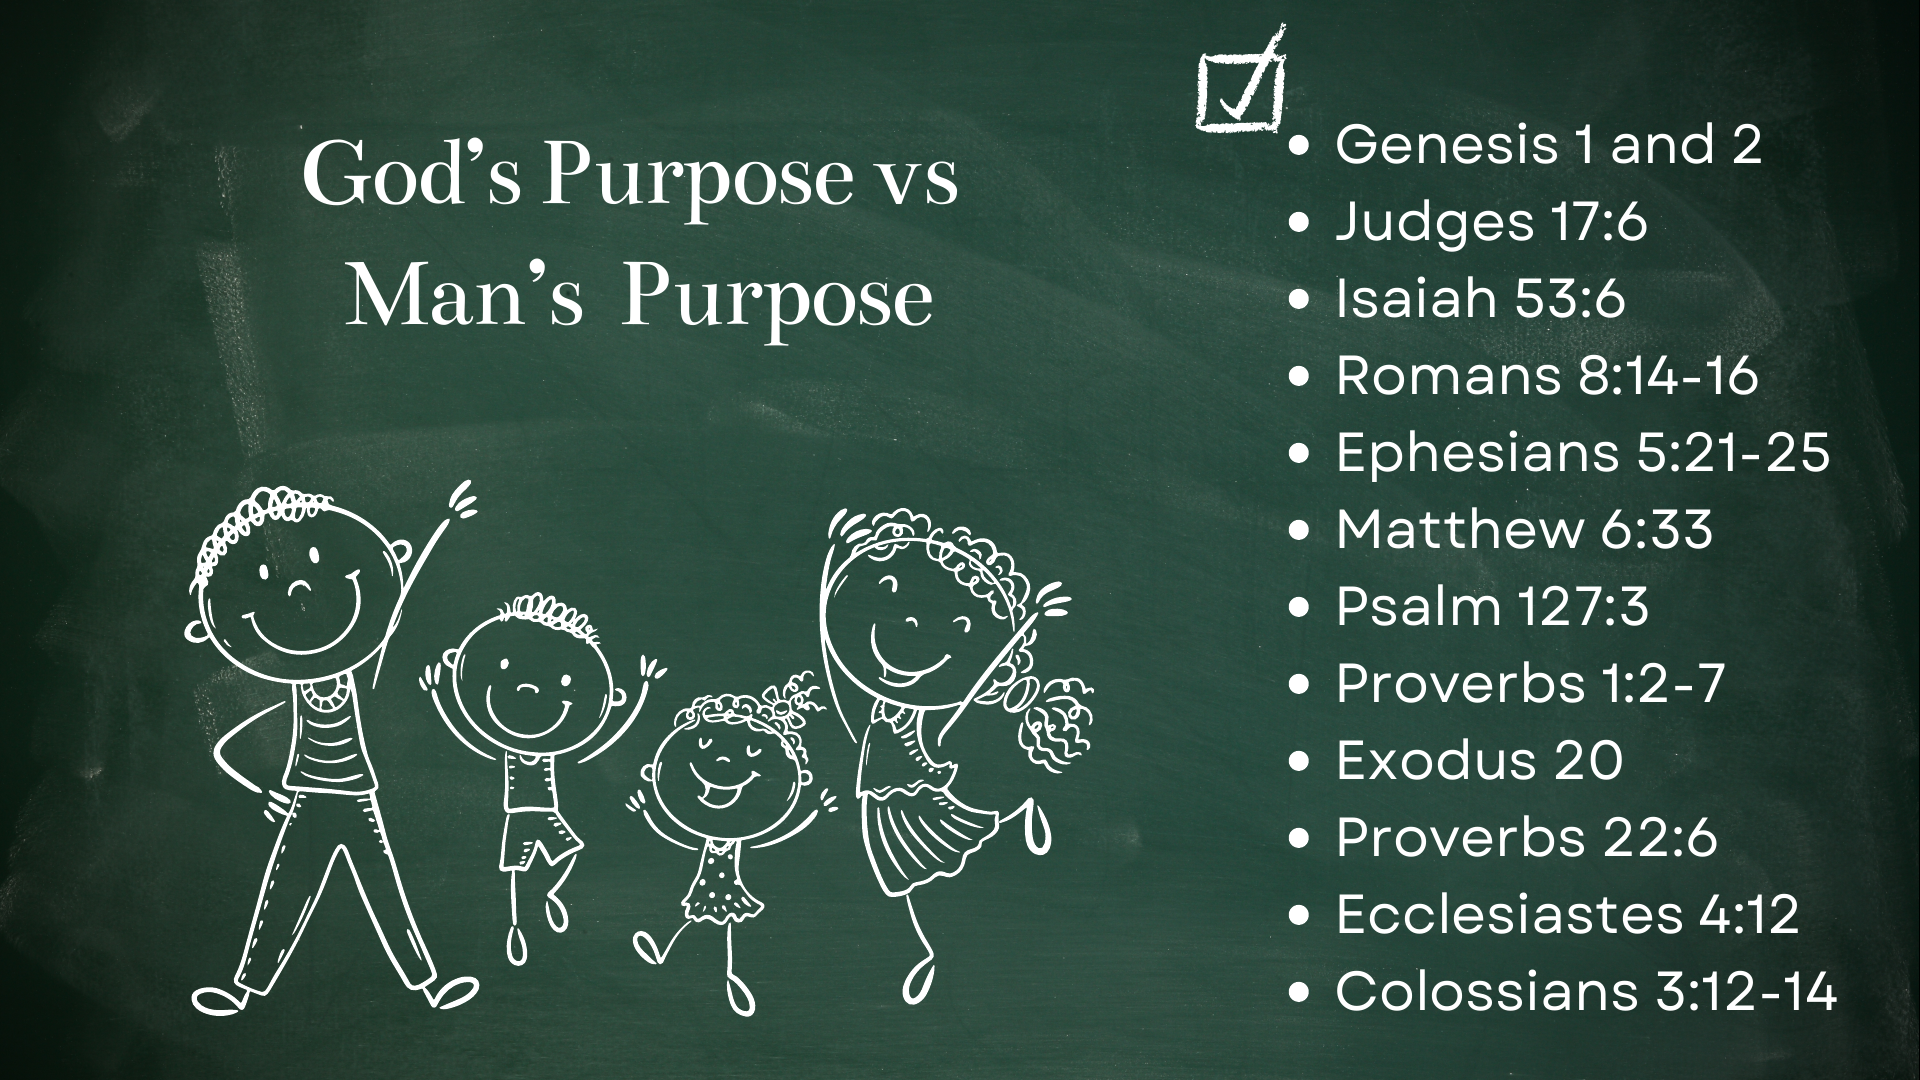 God's Purpose vs Man's Purpose: Genesis 1 &2, Judges 17:6, Isiah 53:6, Romans 8:14-16, Ephesians 5:21-25, Matthew 6:33, Psalm 127:3, Proverbs 1:2-7, Exodus 20, Proverbs 22:6, Ecclesiastes 4:12, Colossians 3:12-14